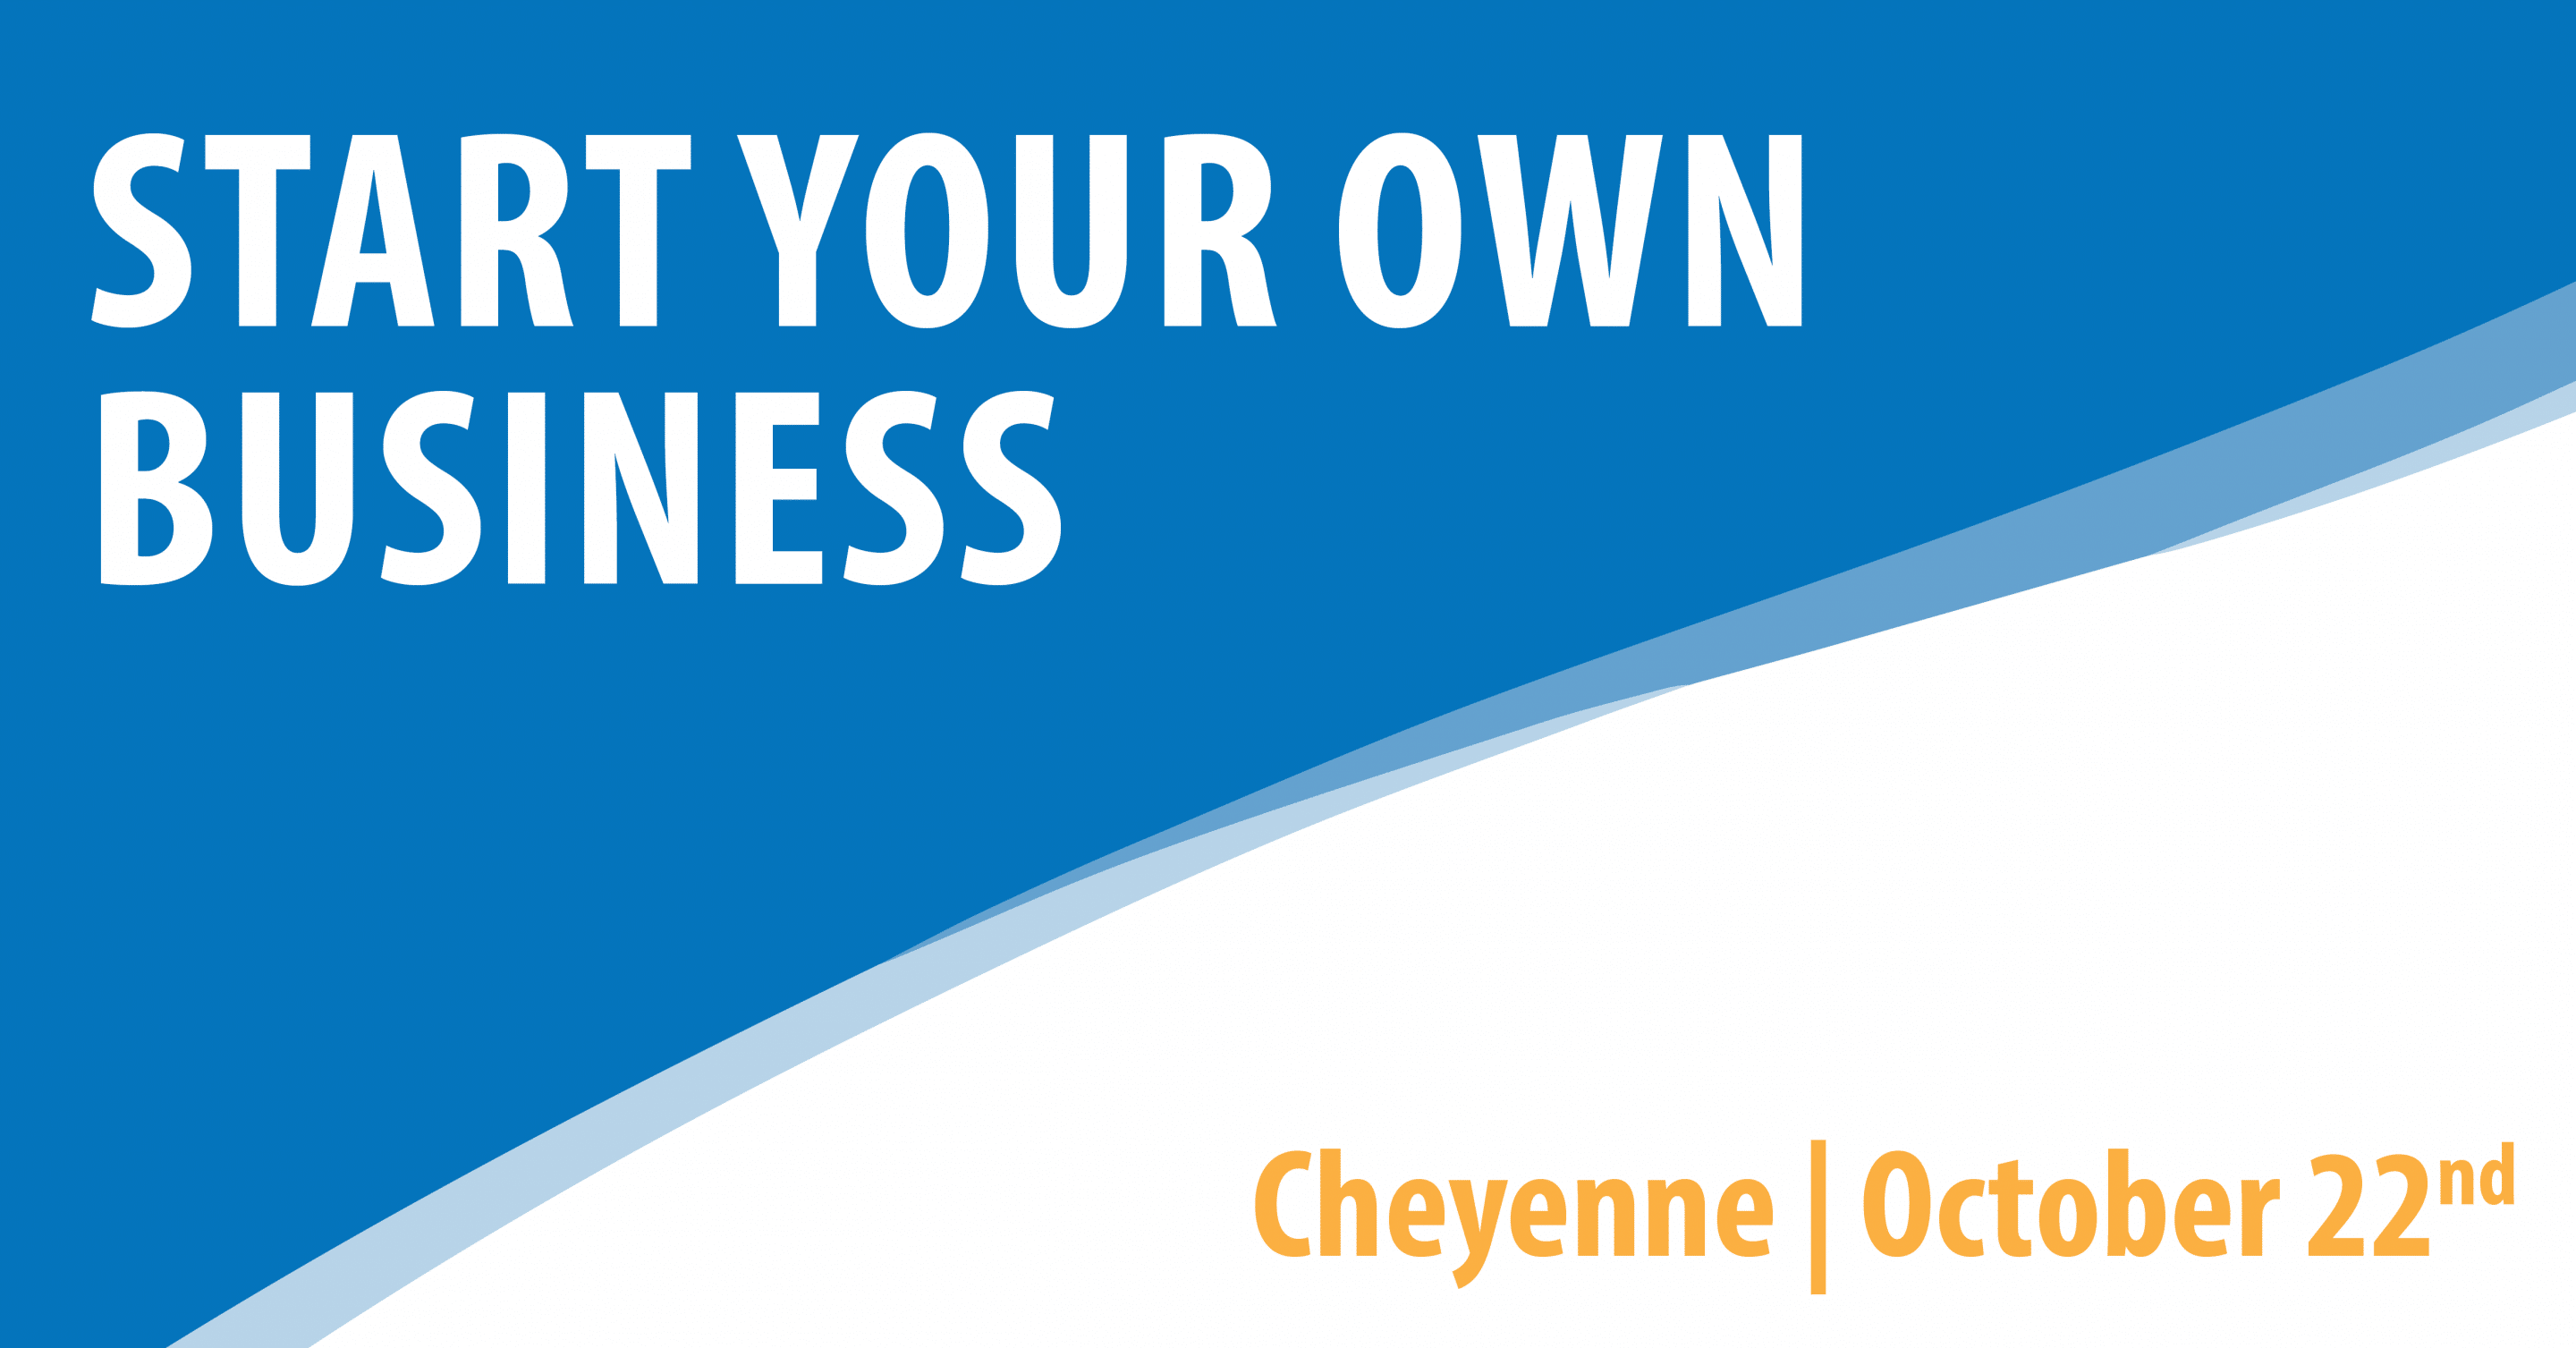 Start Your Own Business - Cheyenne